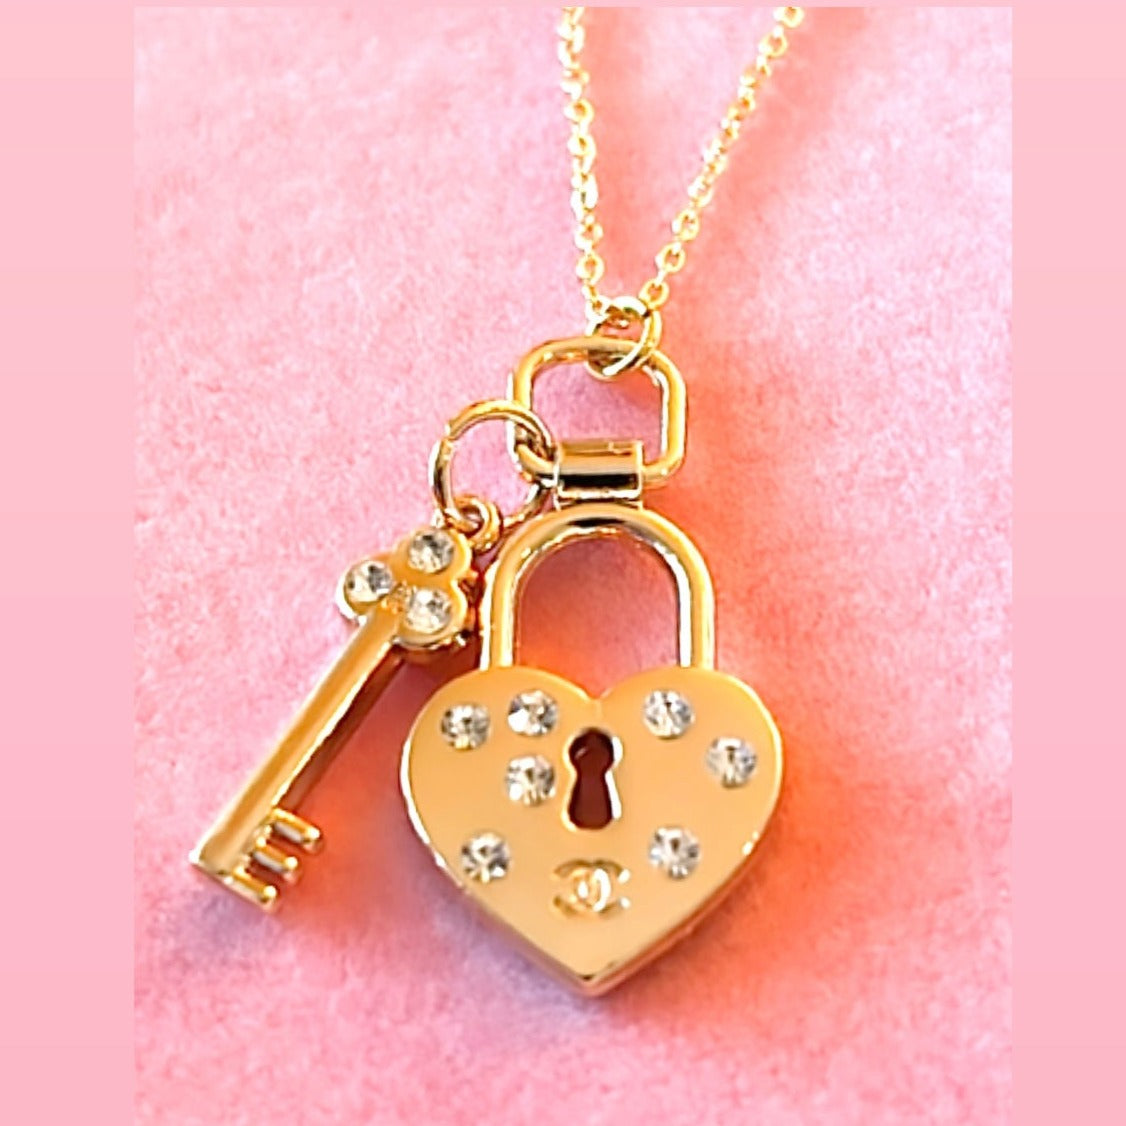 The CC Lock & Key Necklace